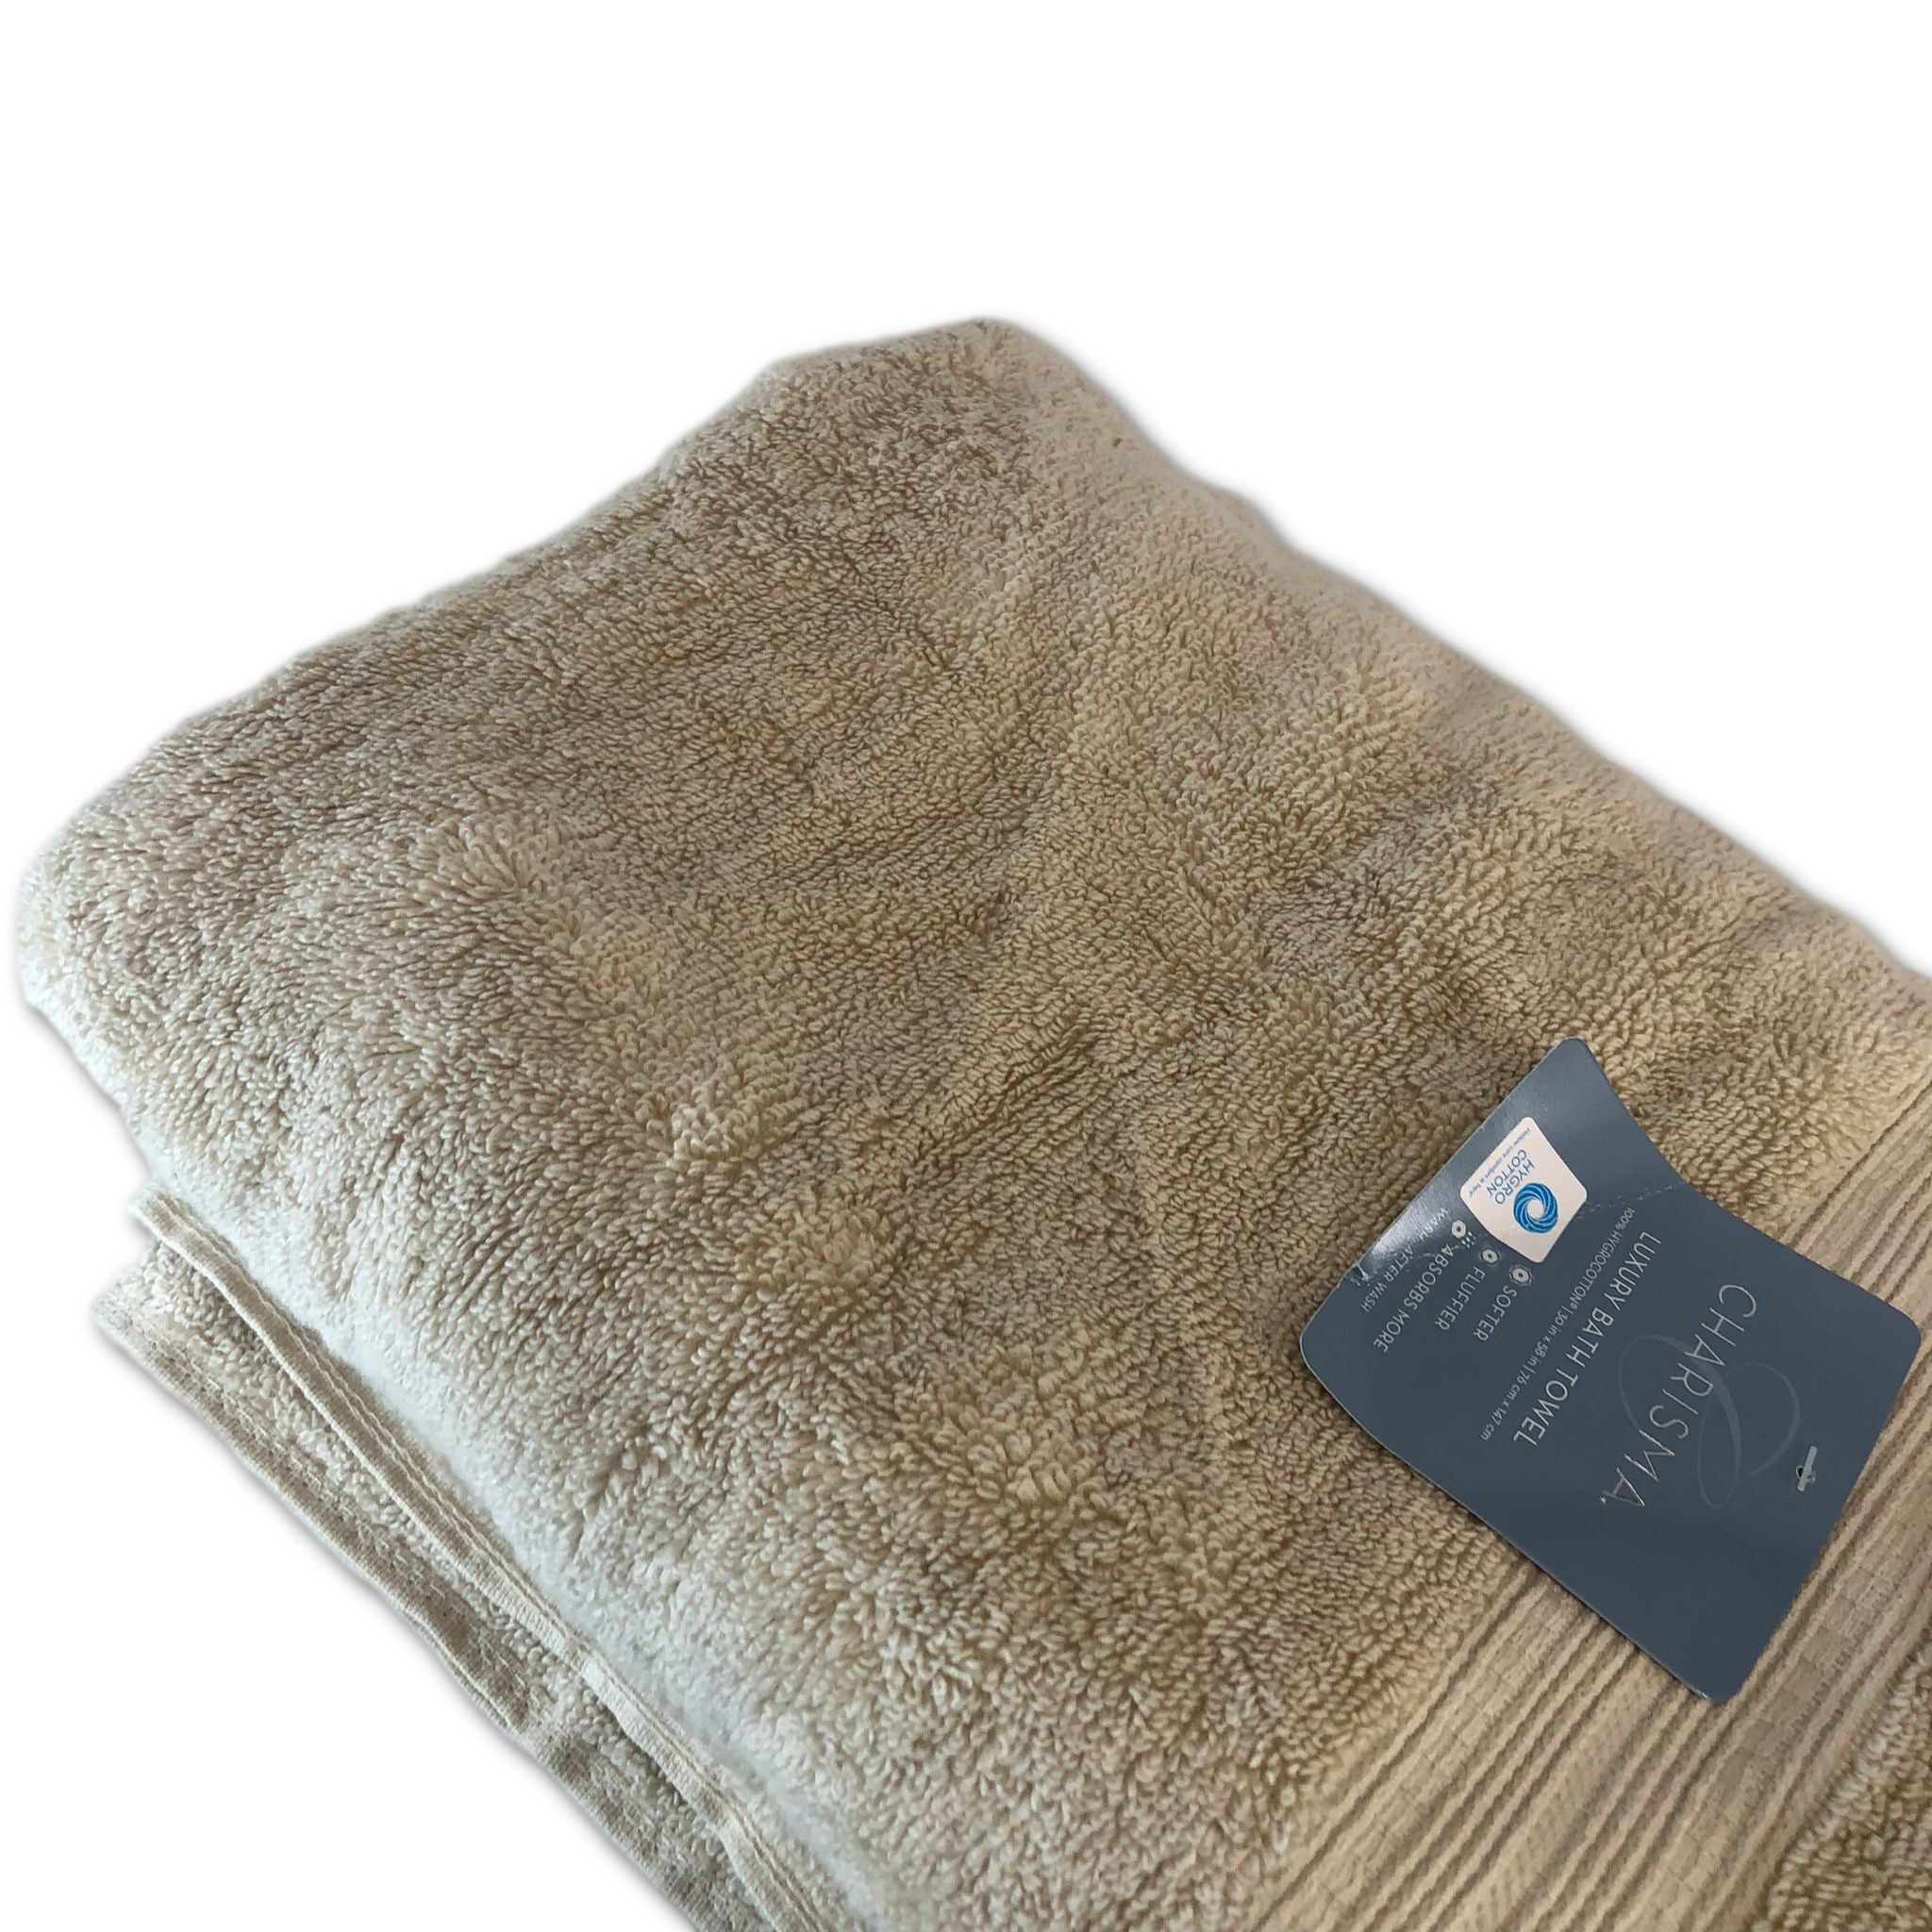 Charisma 100% Hygro Cotton 674 GSM 6-piece Towel Set